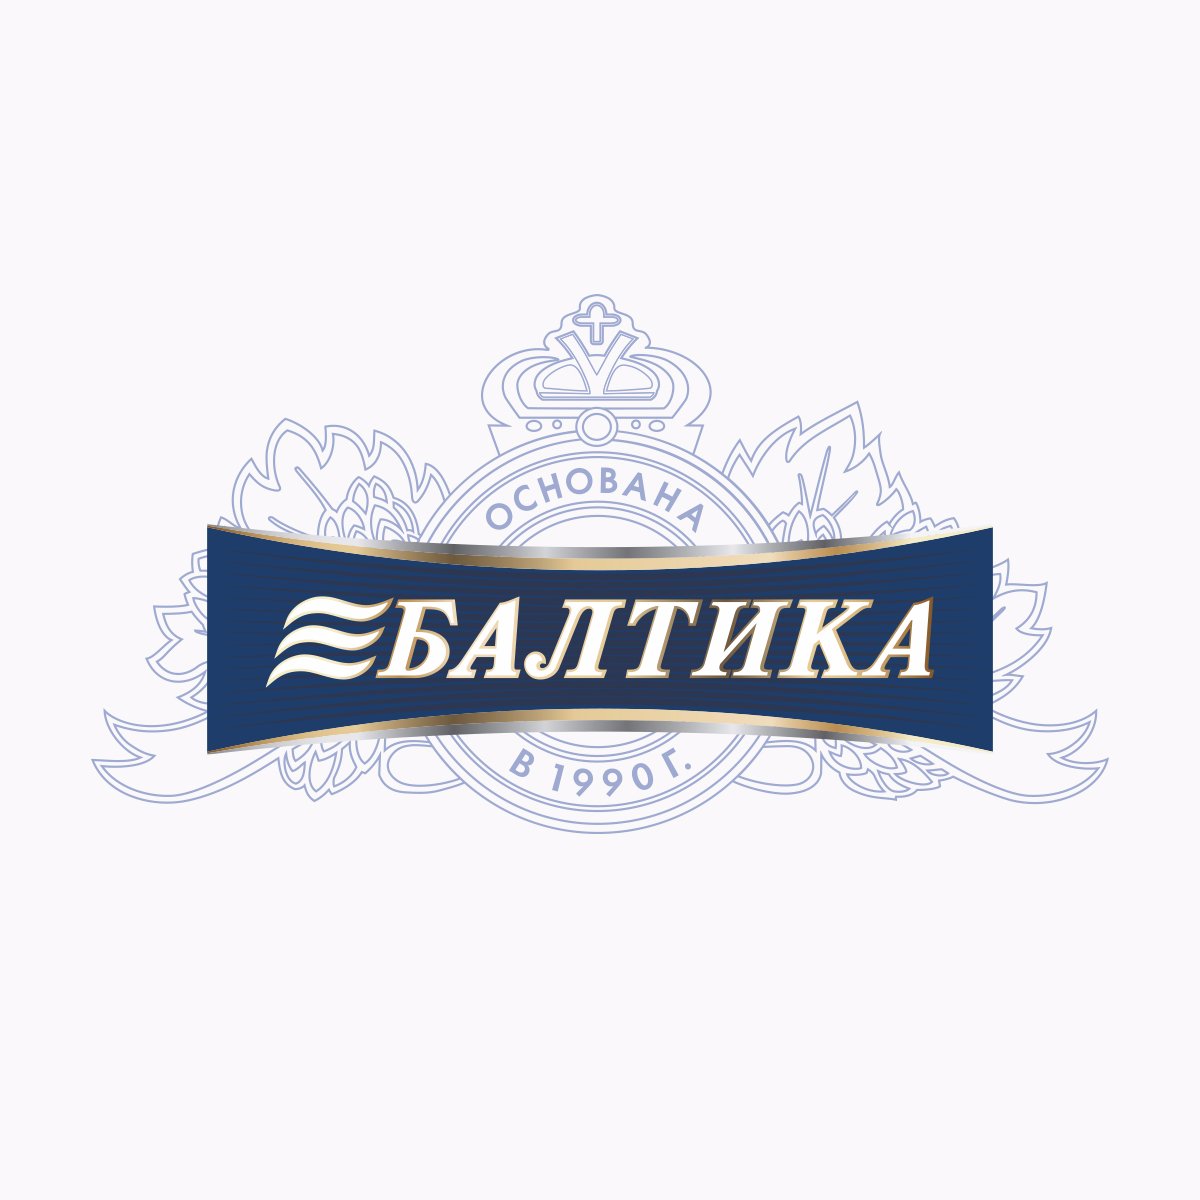 POSM-материалы для компании «Балтика» 